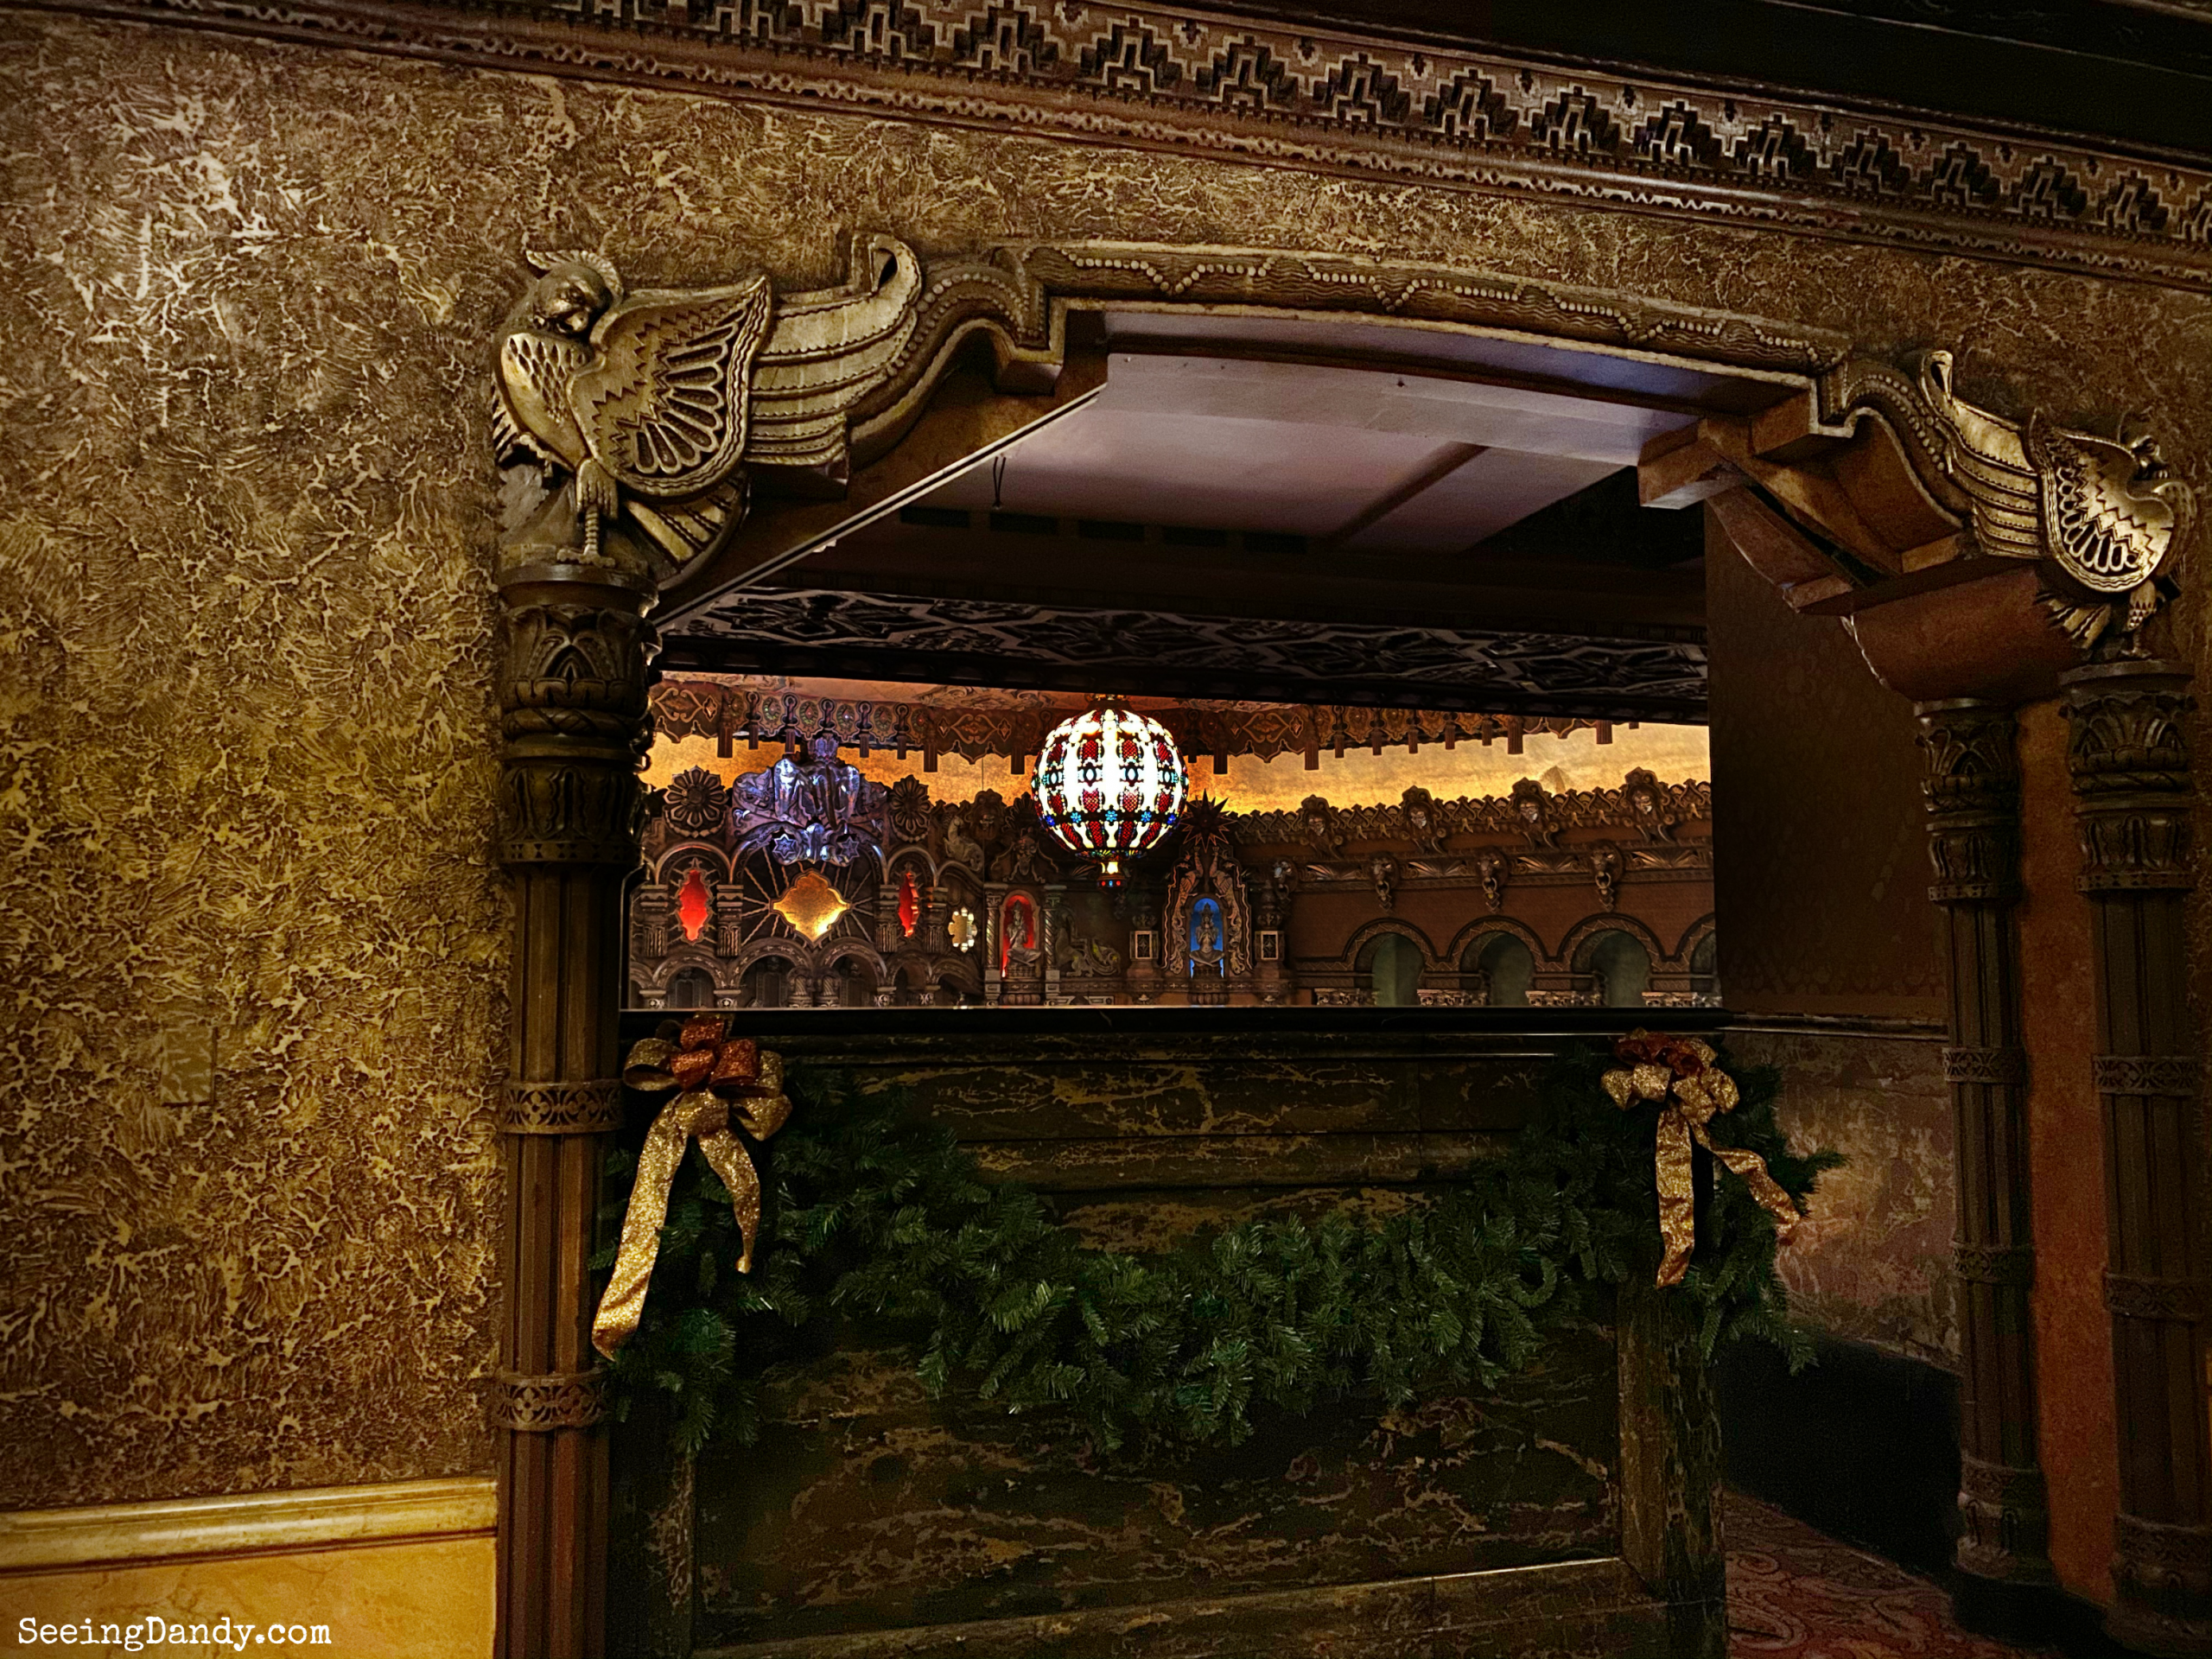 St Louis Fabulous Fox Theatre Christmas decorations with chandelier.